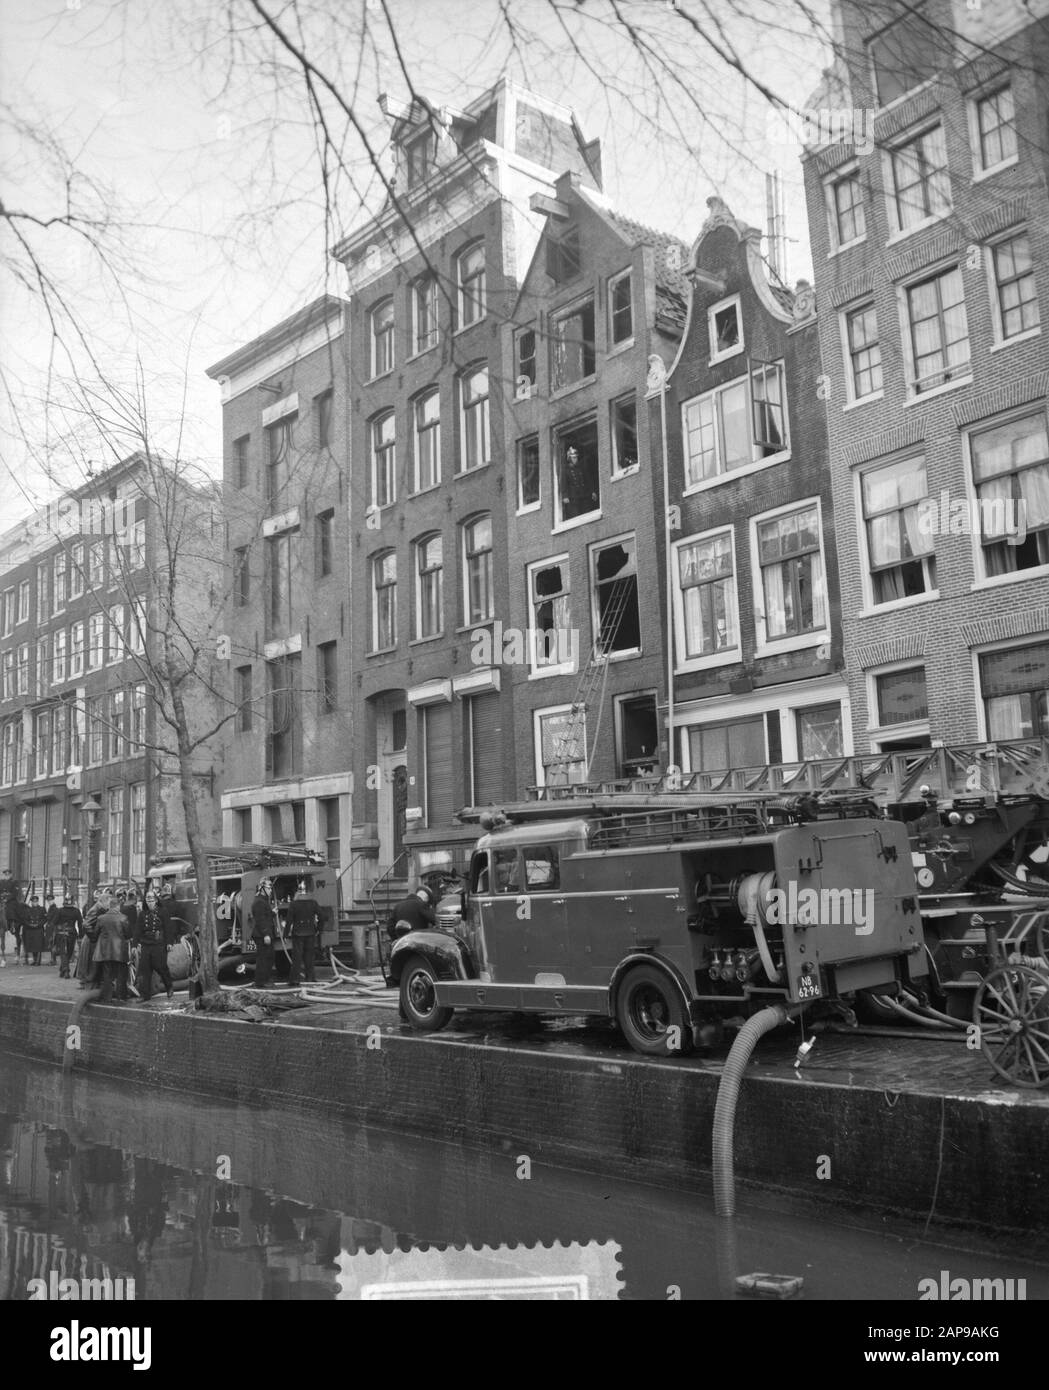 Brand Oz Achterburgwal 85 Amsterdam Data: 29 Novembre 1959 Località: Amsterdam, Noord-Holland Parole Chiave: Brand Foto Stock